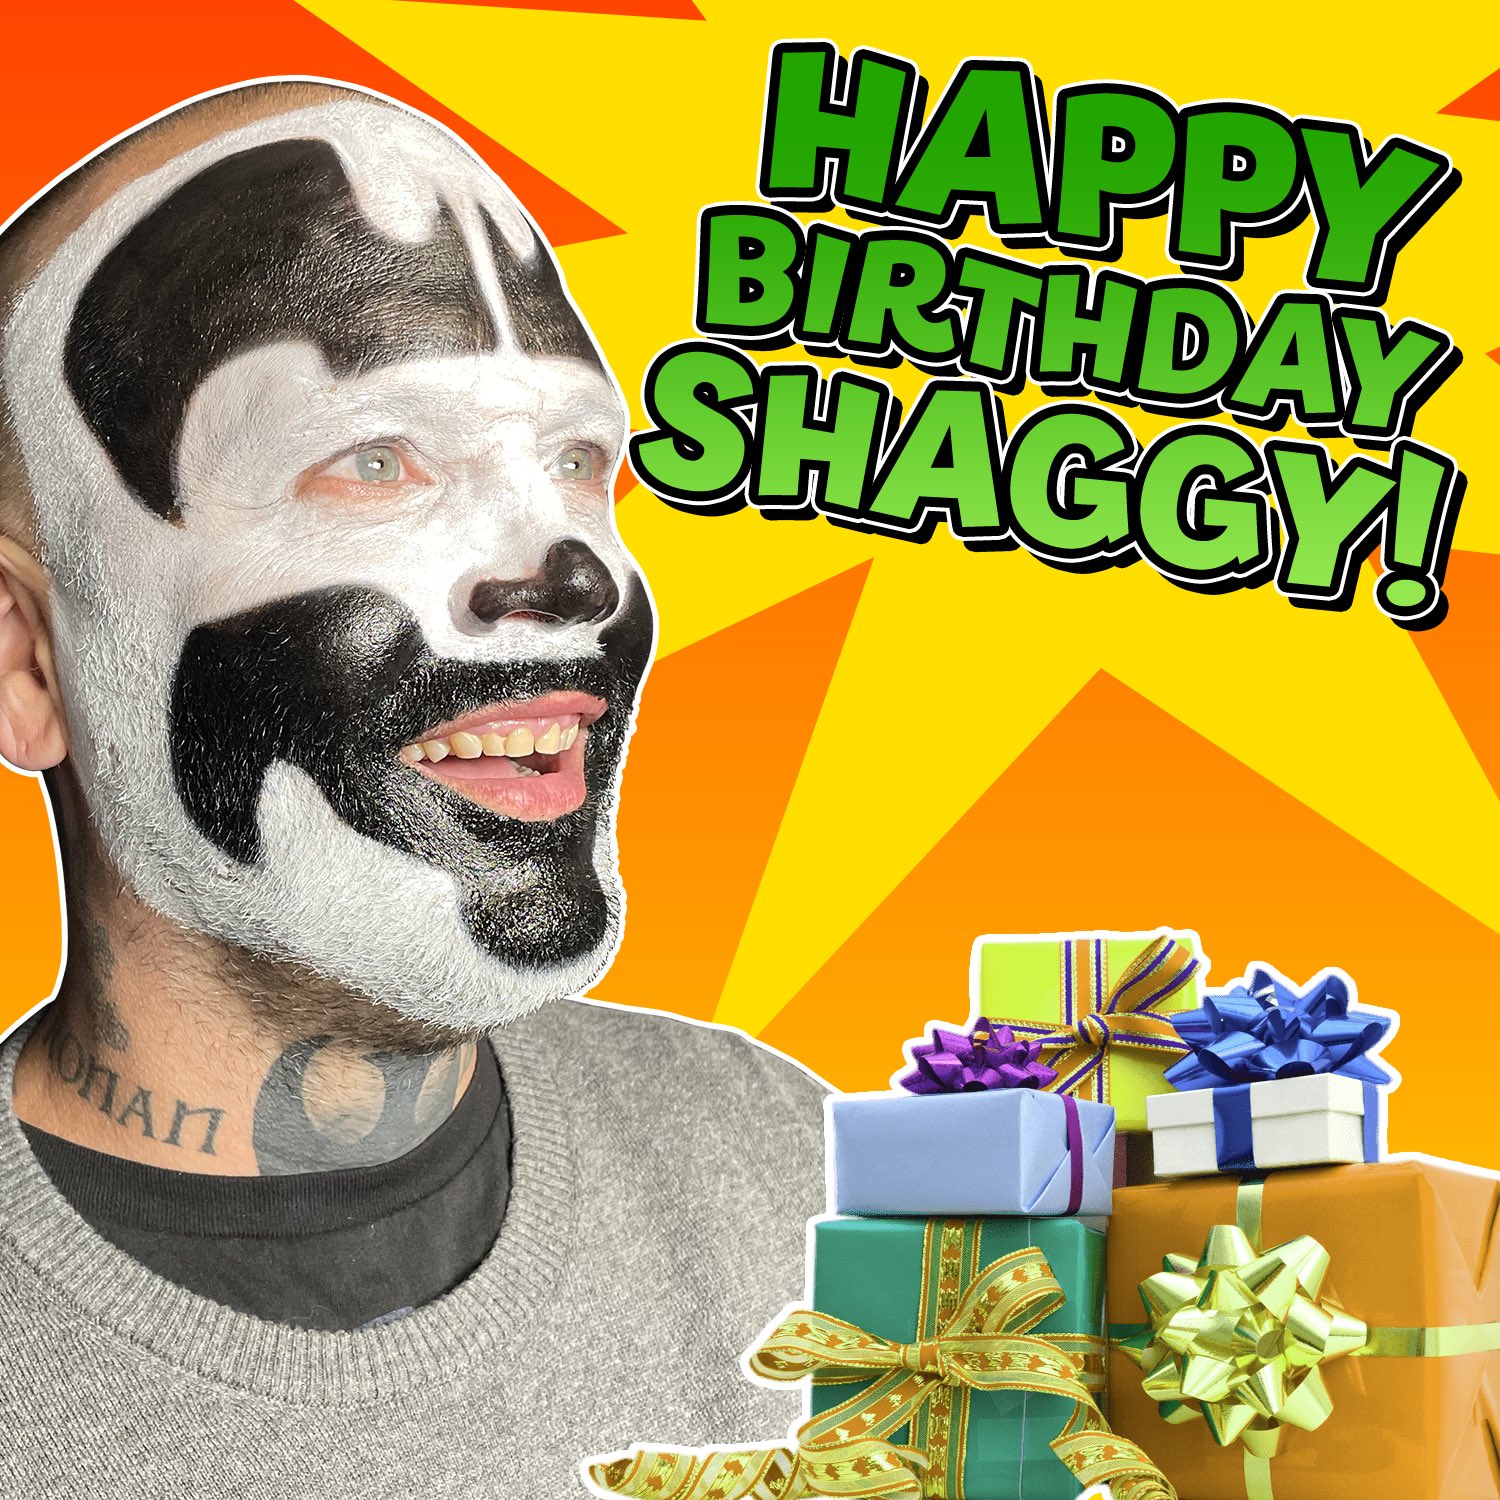 Happy Birthday Shaggy 2 Dope! 